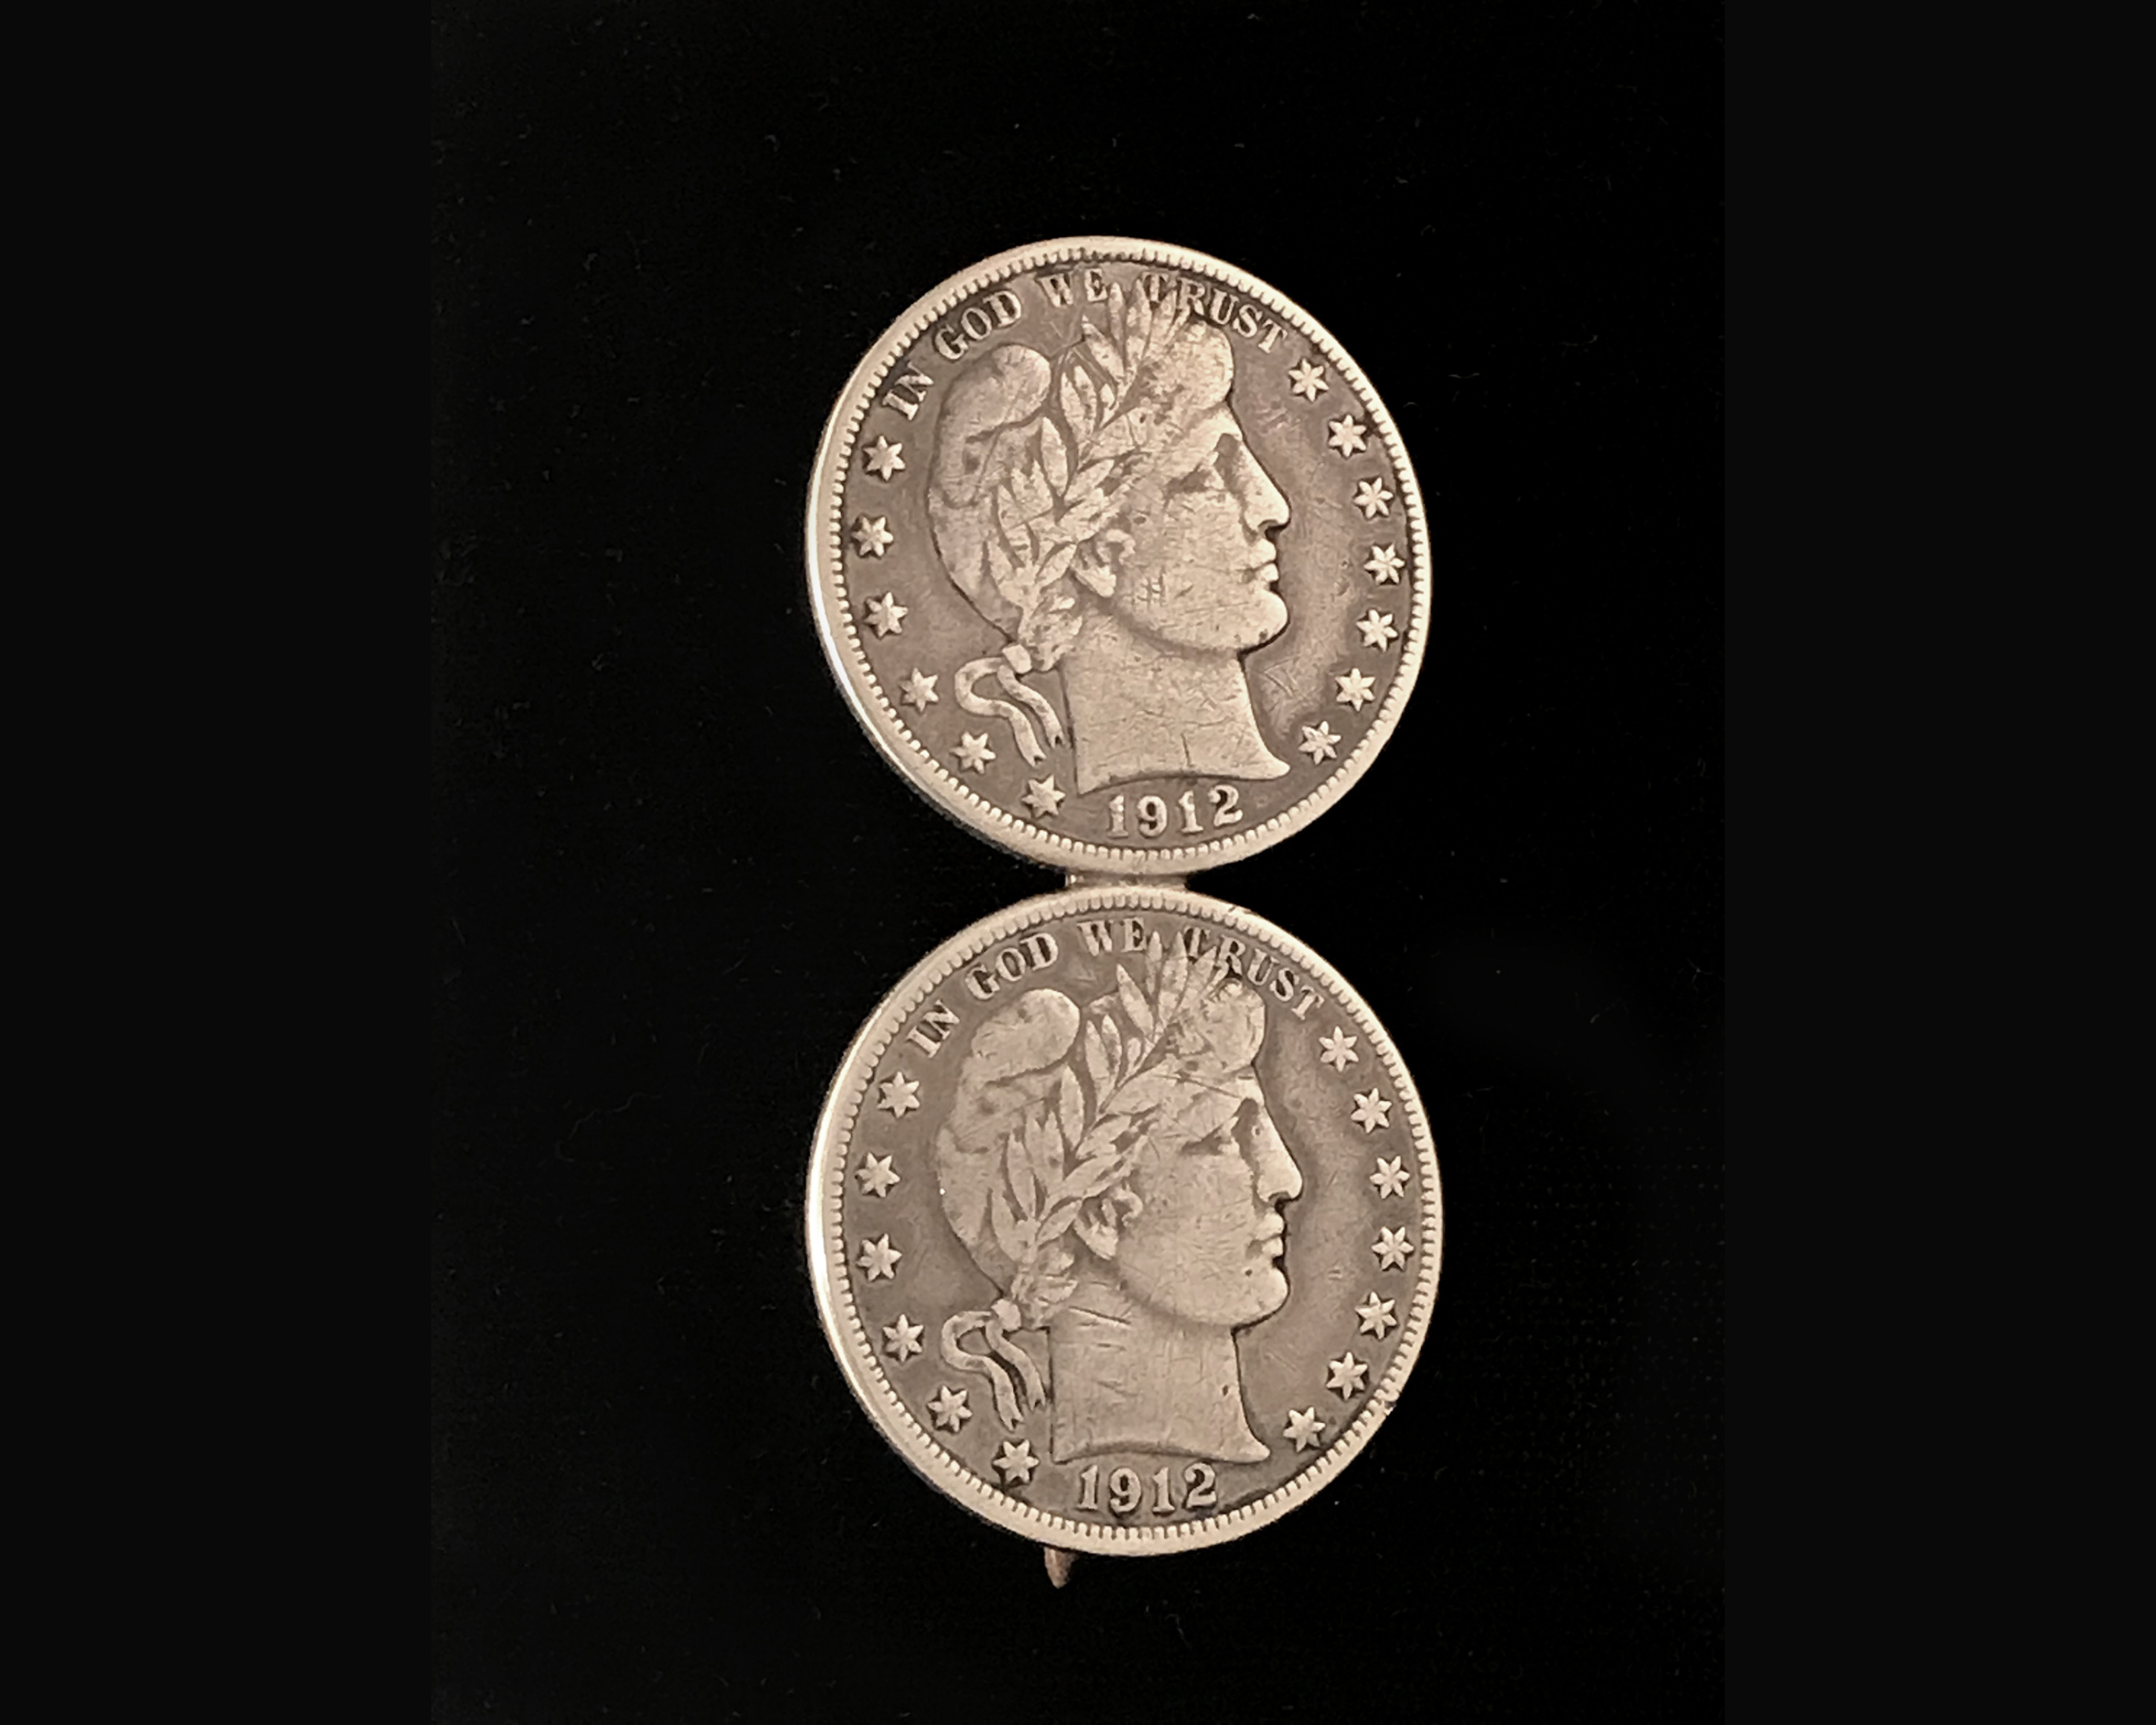 Antique Coin Manta Pin From Laguna Pueblo Morning Star Traders